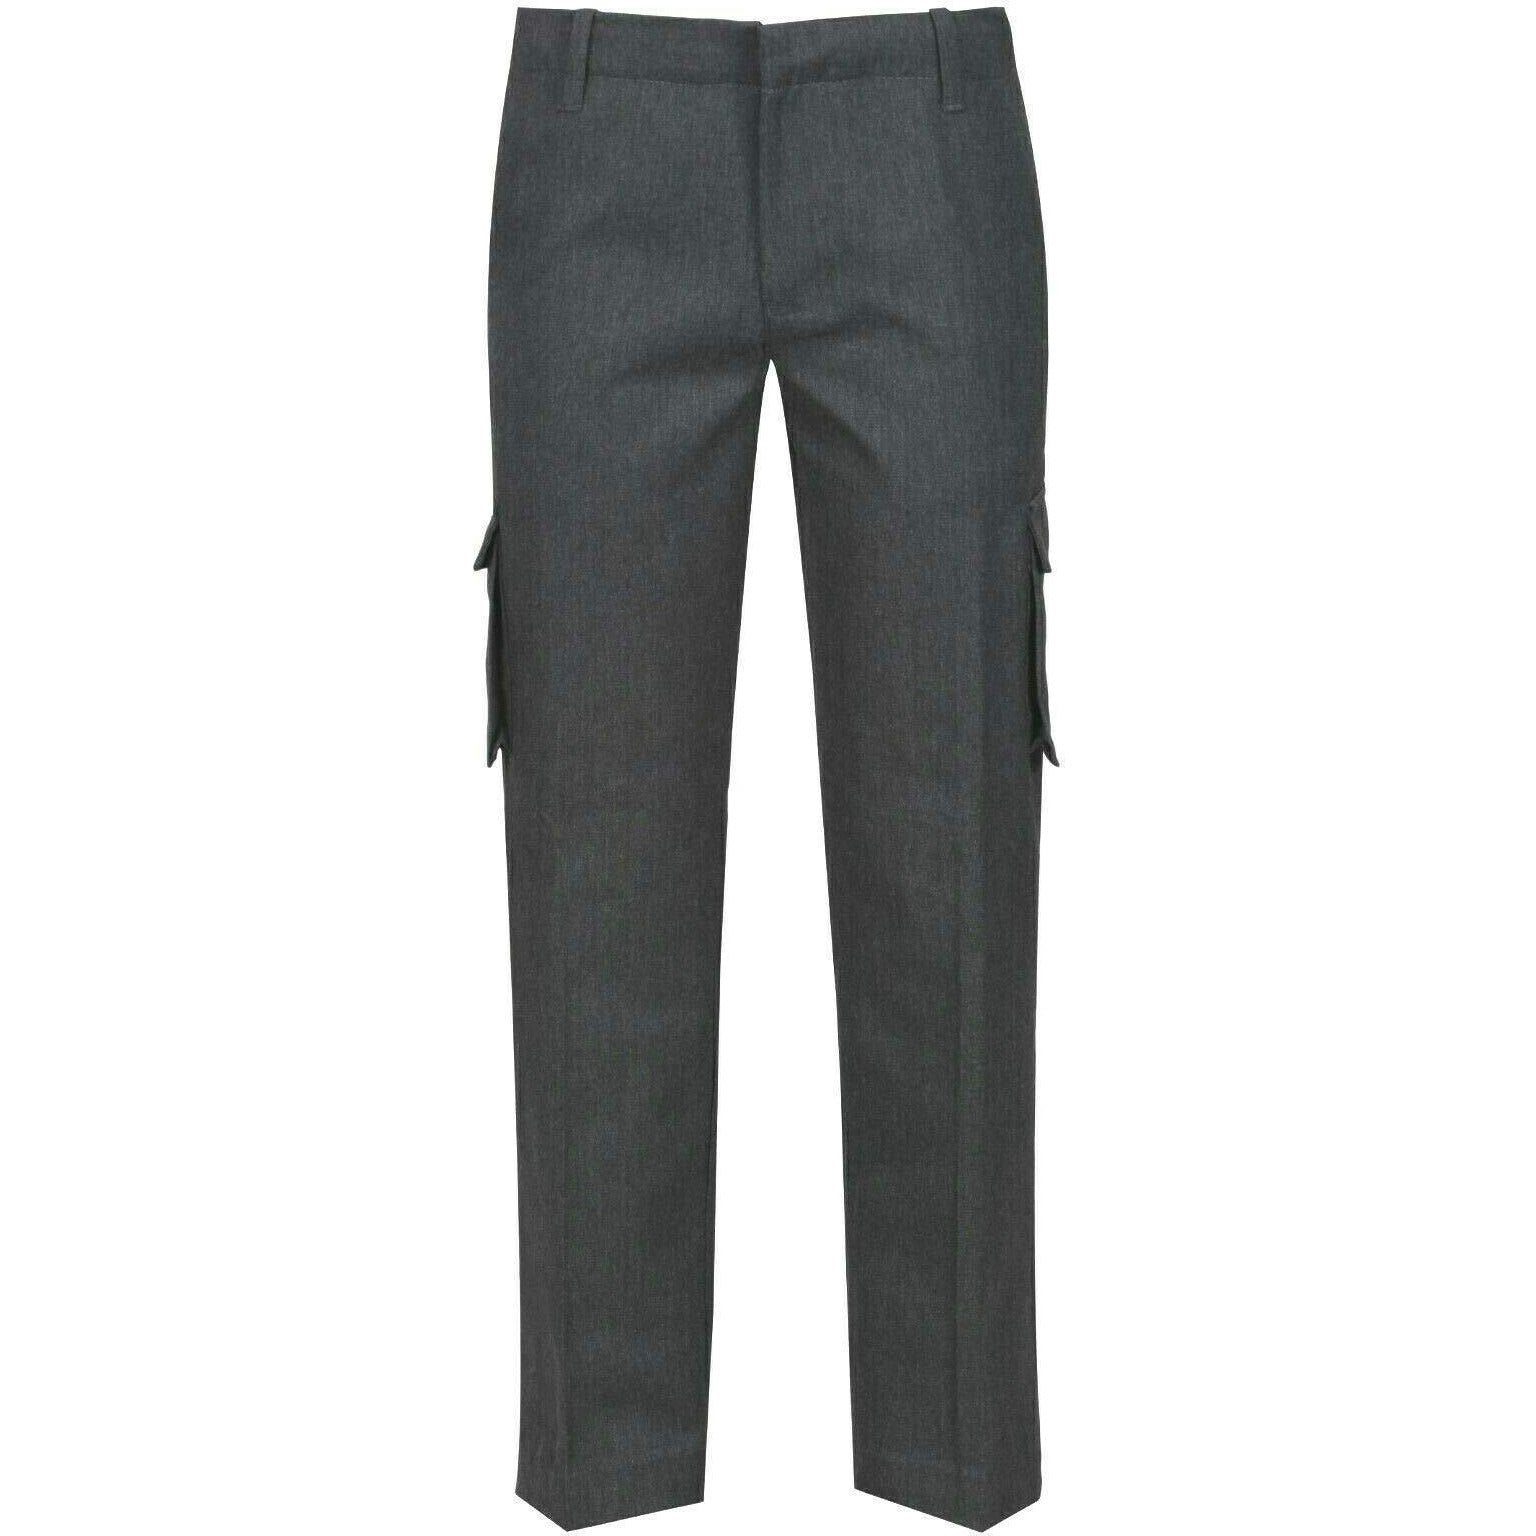 Boys Slim Fit Grey School Trousers Adjustable Waist Cargo Pocket 2-12